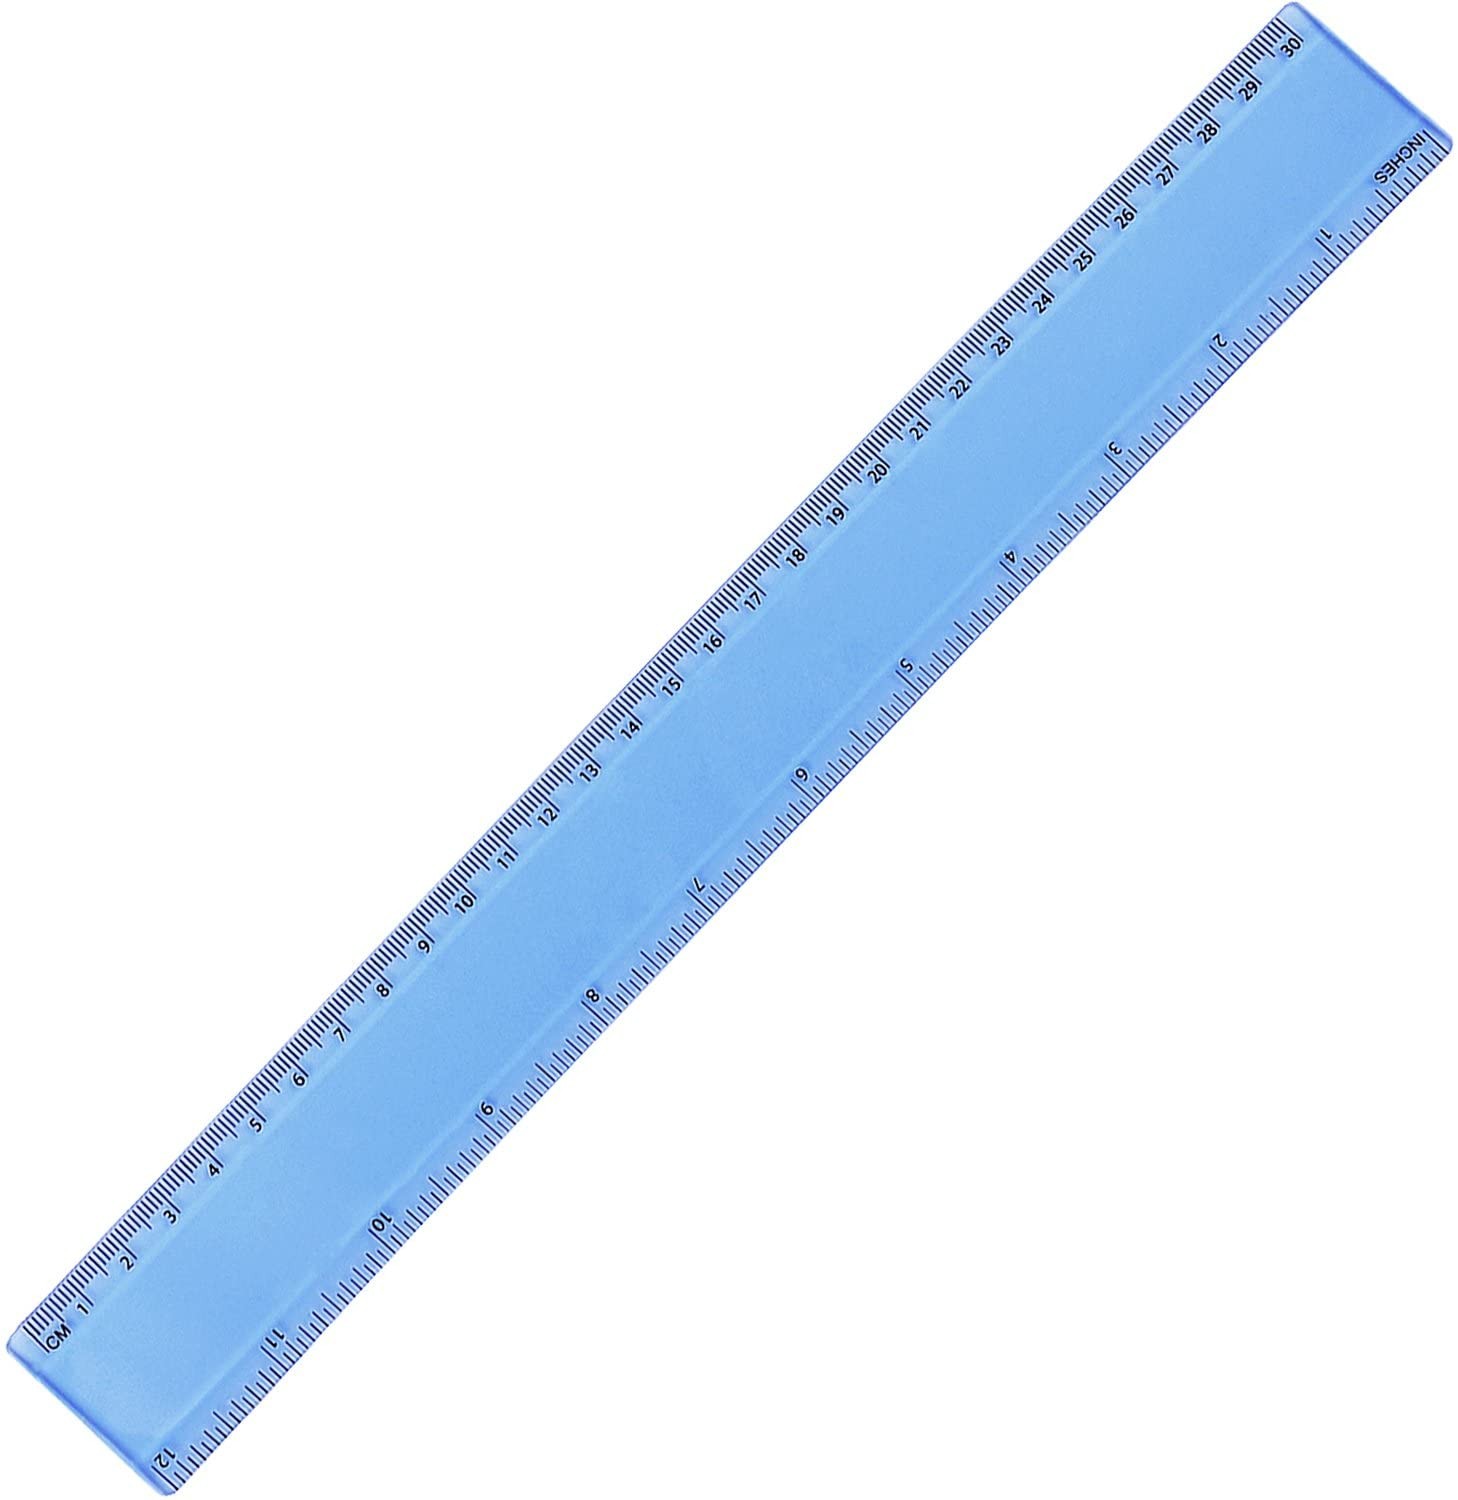 18%22++Blue+Tint+ruler